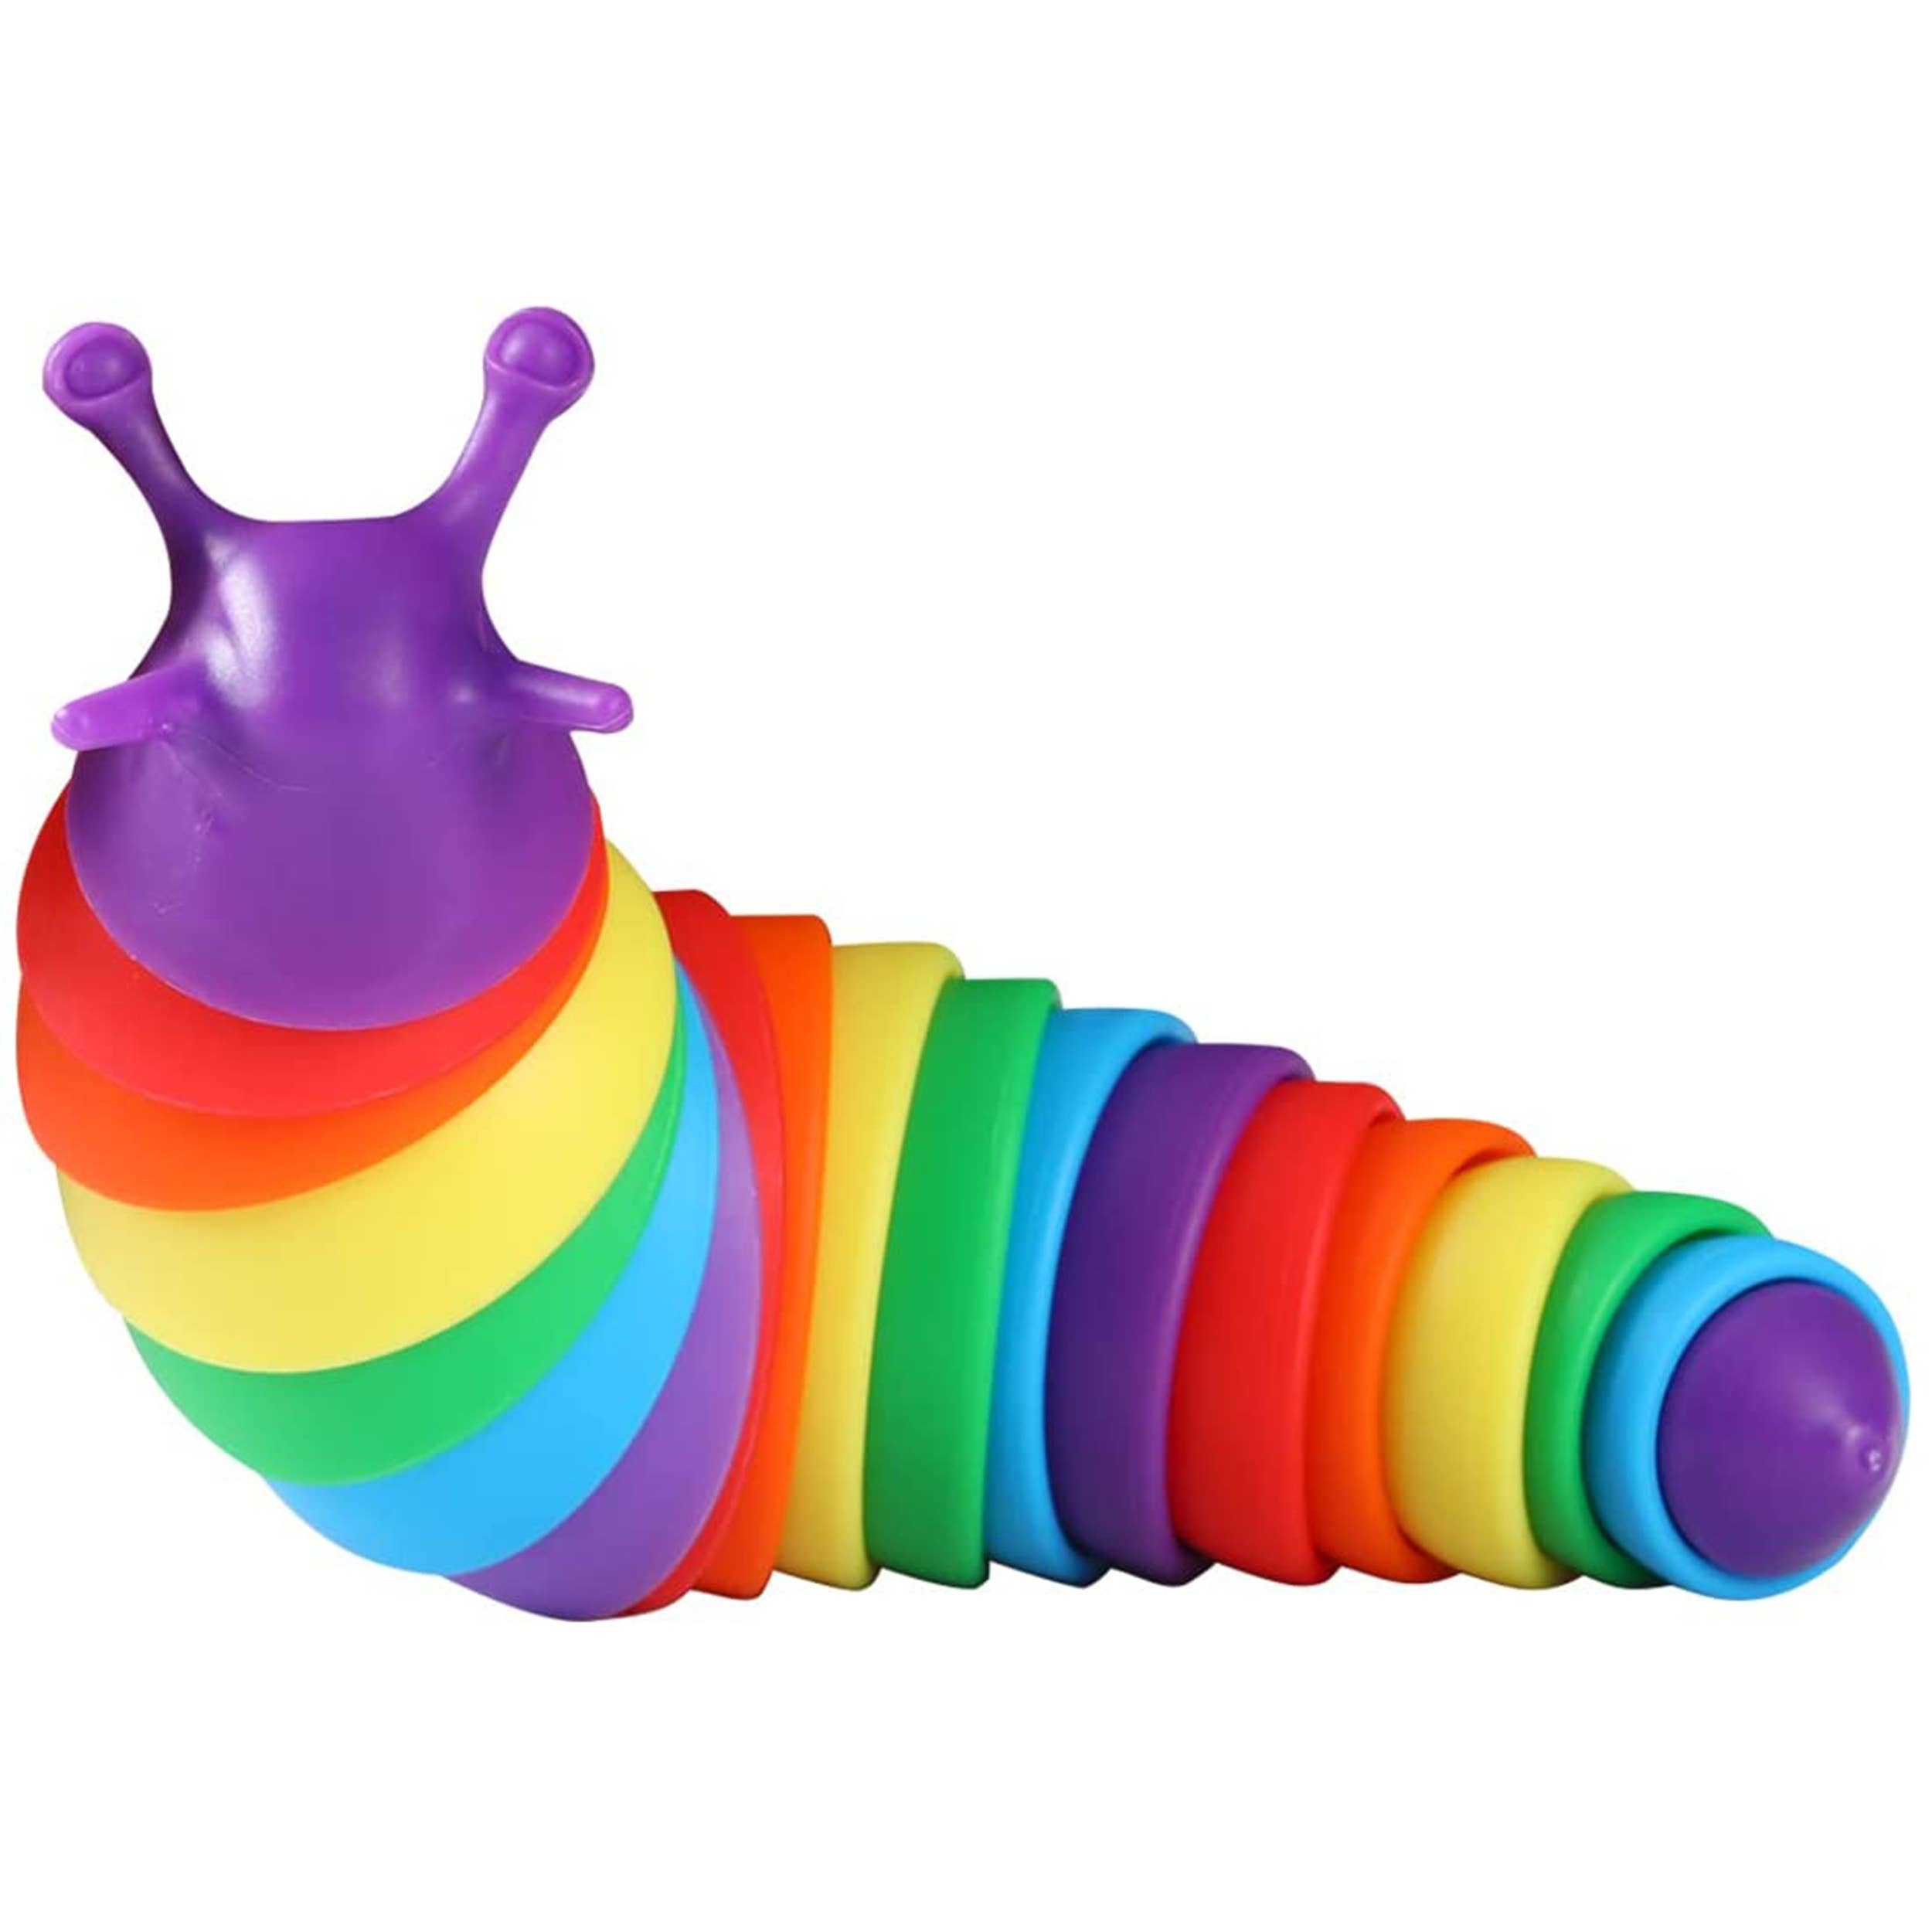 Fidget Slug Stress Toy - 24h delivery